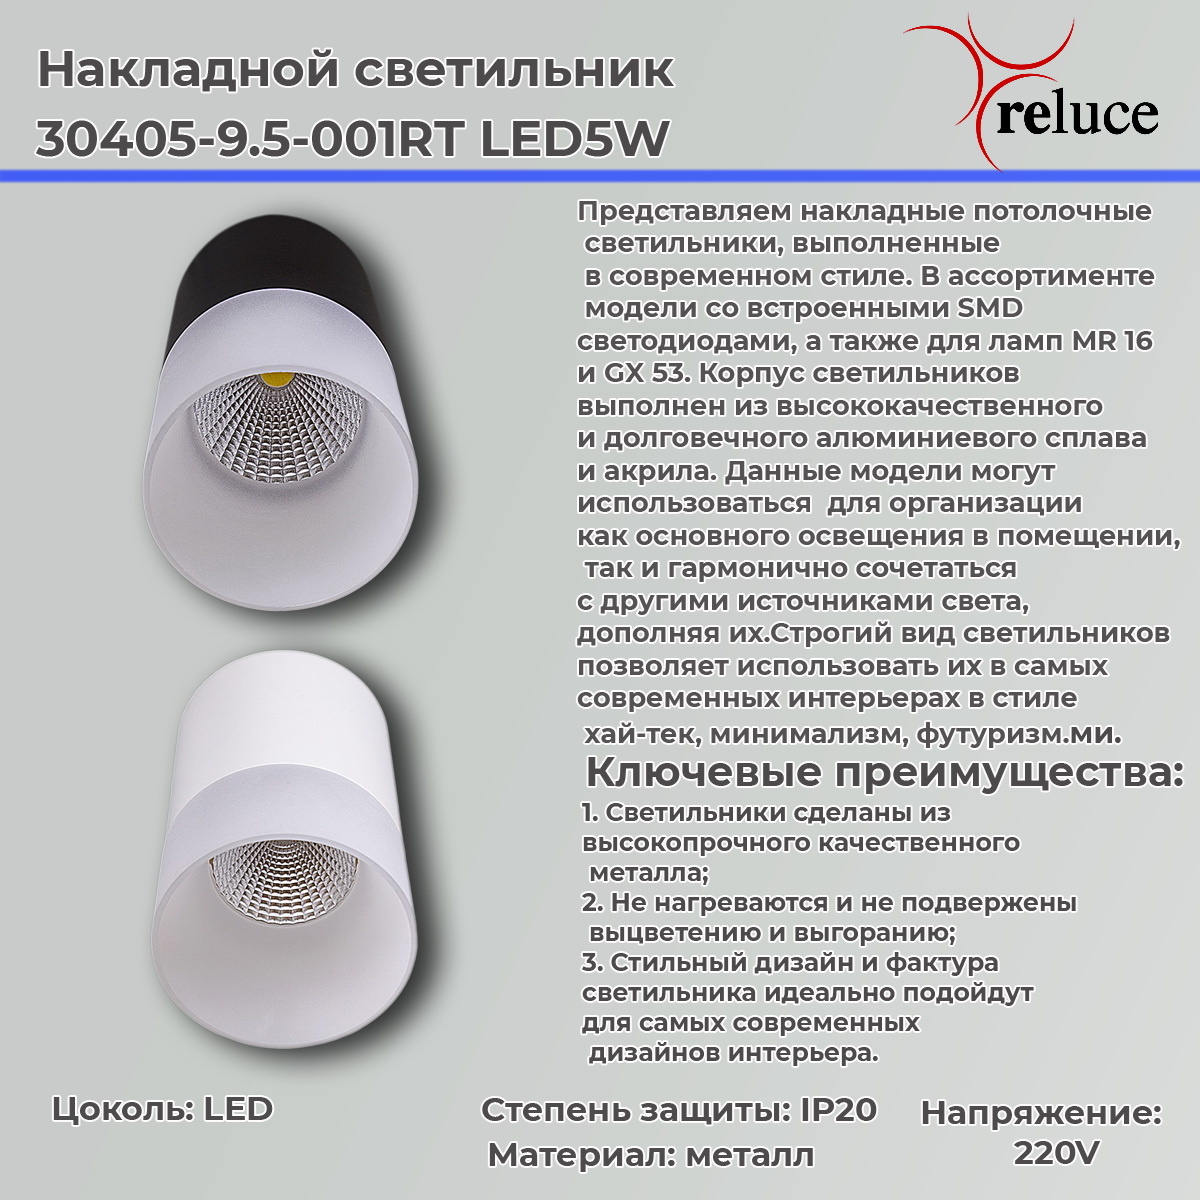 Накладной светильник Reluce 30405-9.5-001RT LED5W WT